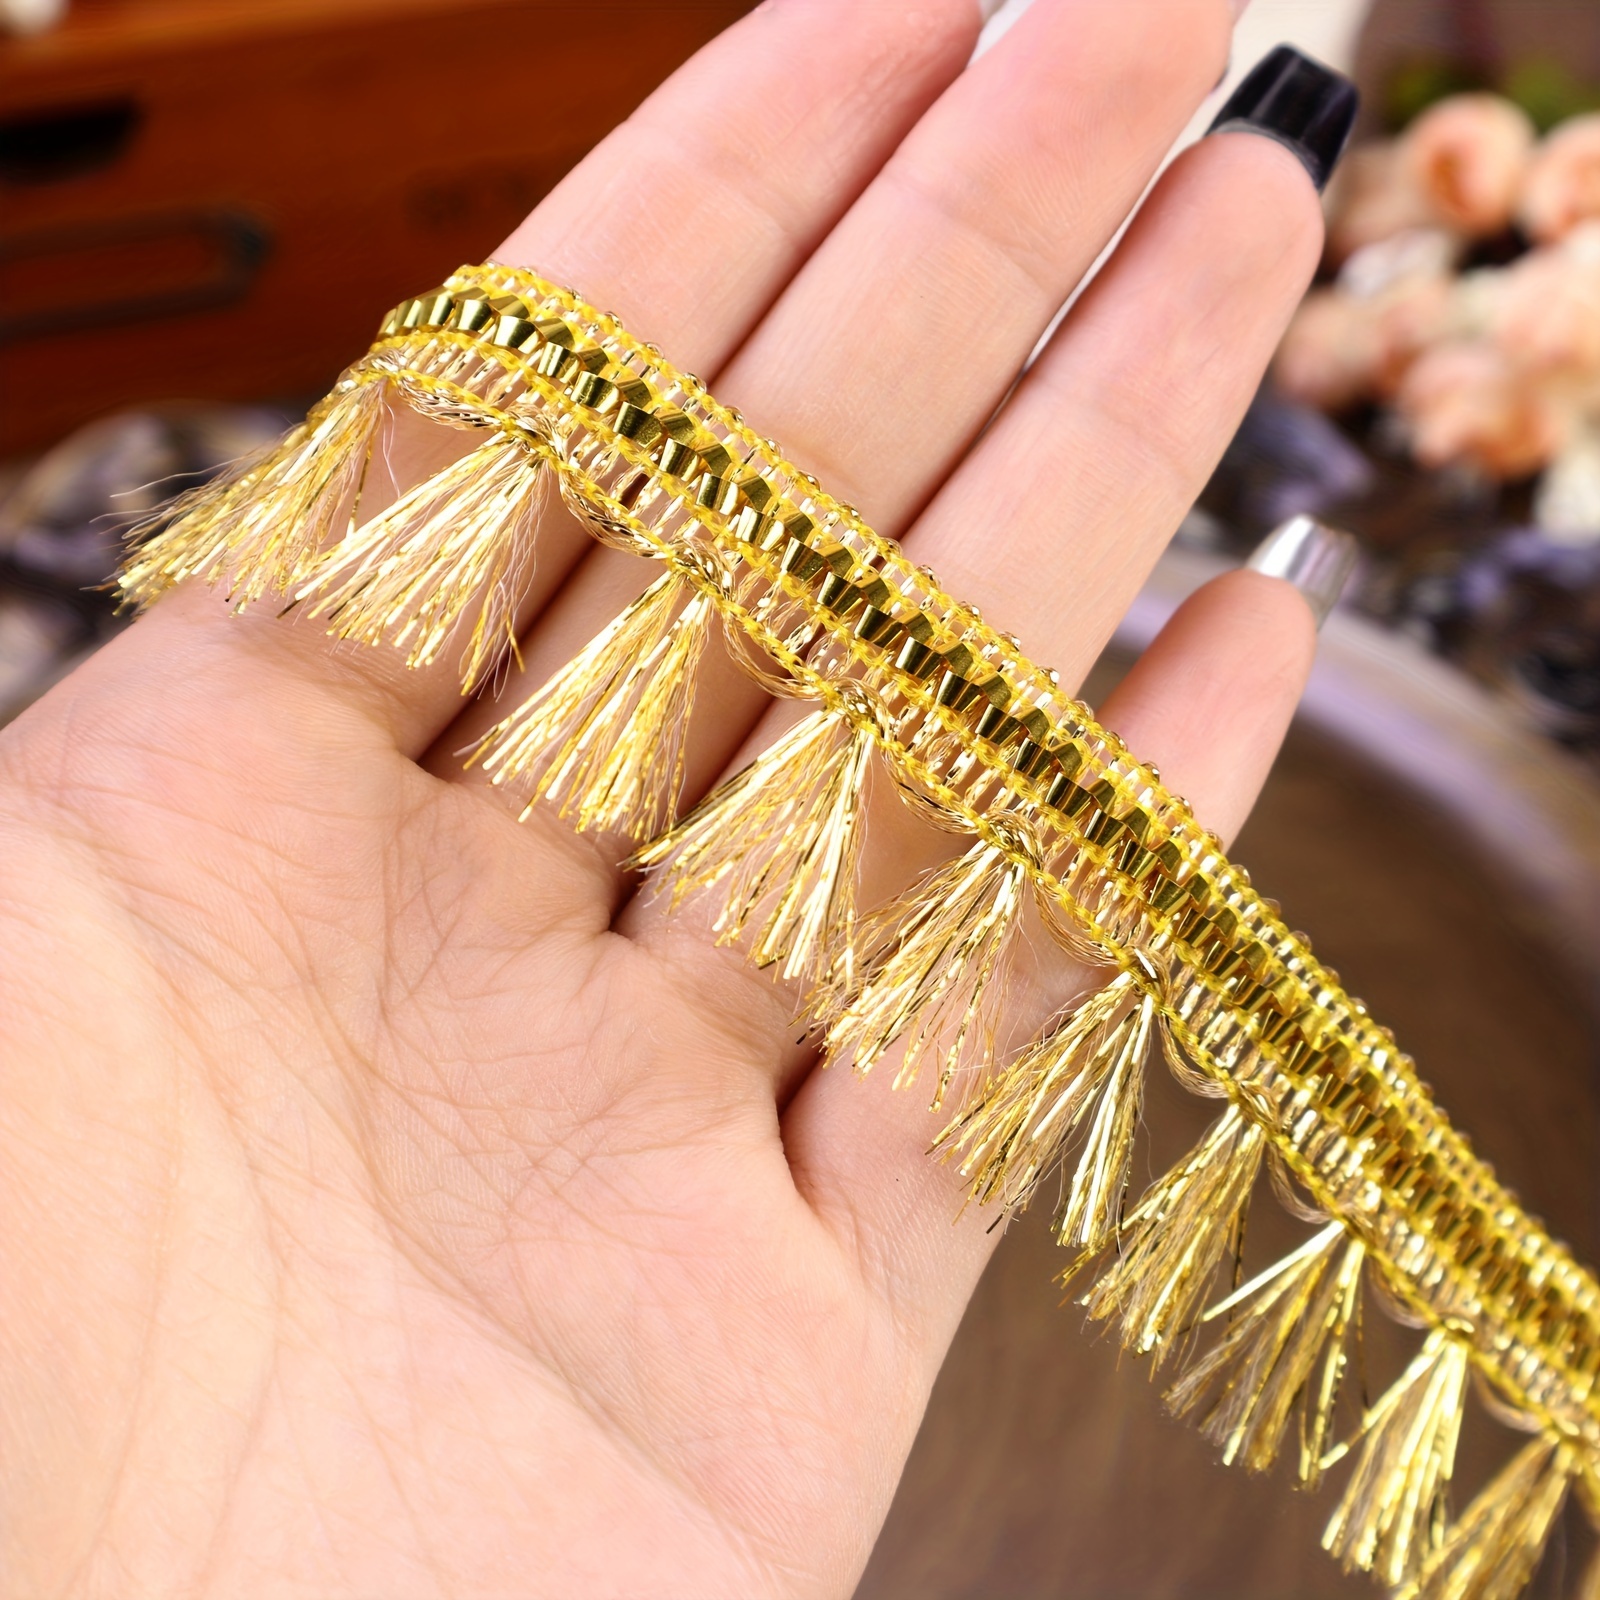 Gold Bullion Fringe Trim,2.5'' Wide for Sewing DIY Decoration [10 Yards]